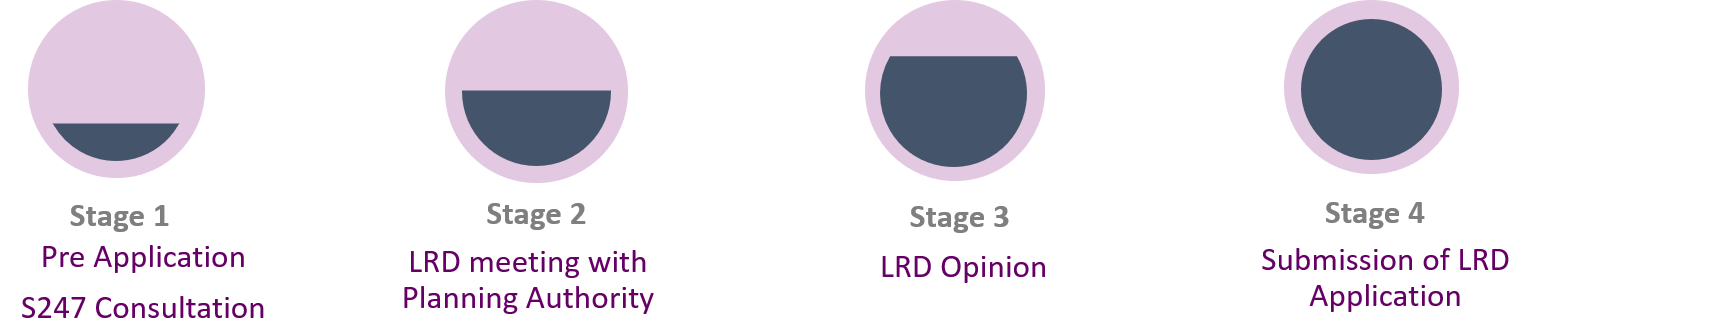 LRD 4 stage process